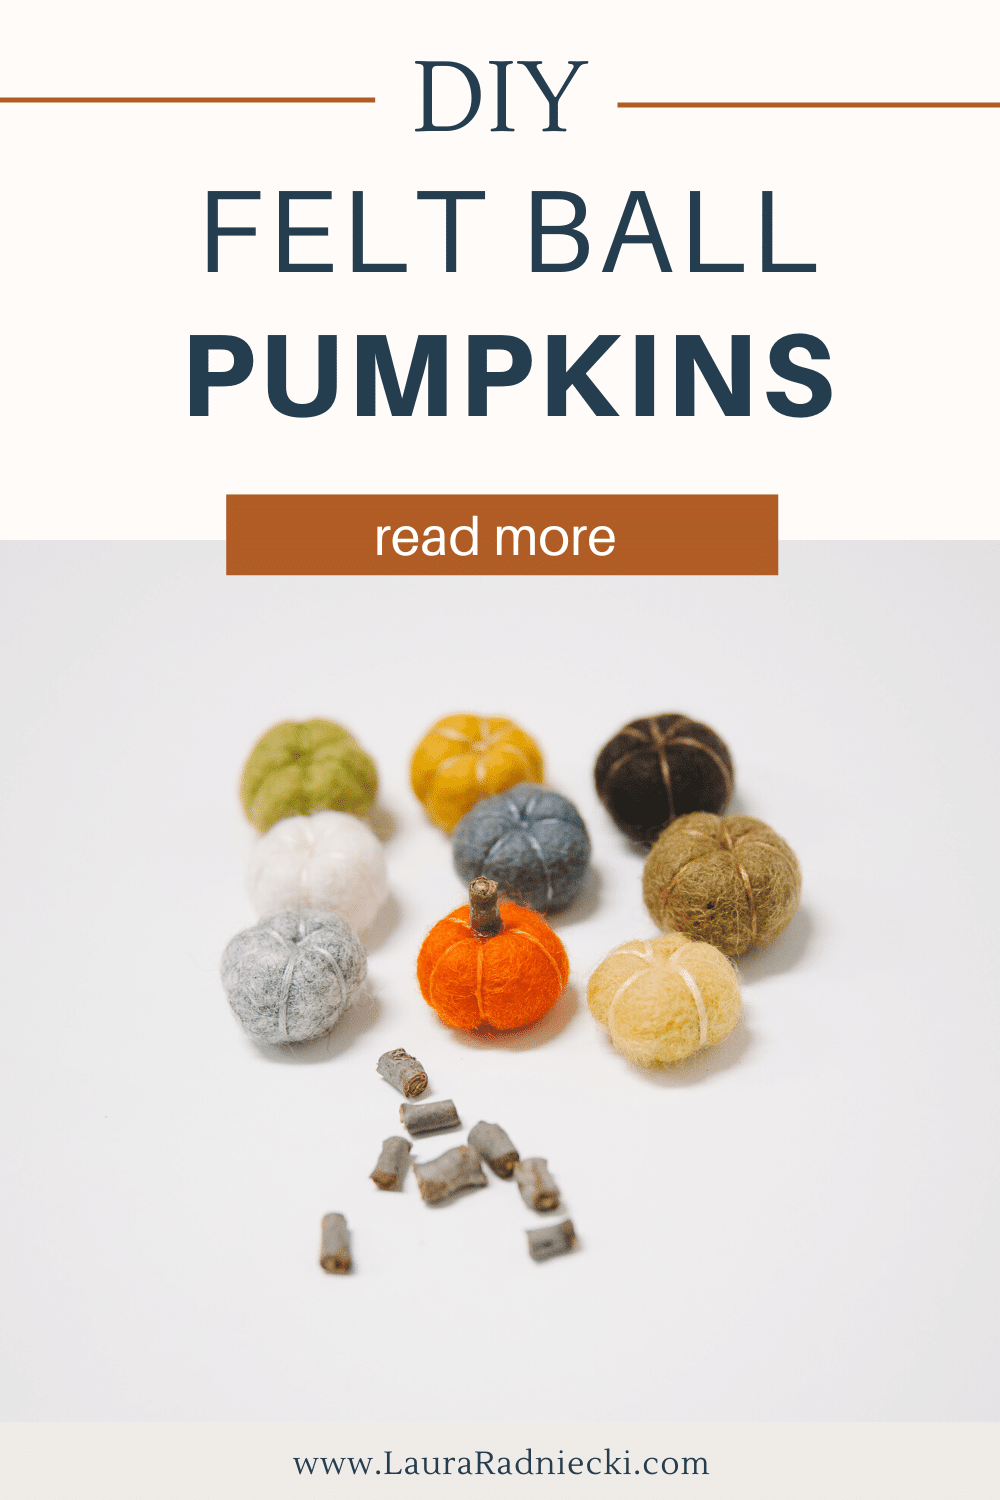 How to Make Mini Felt Ball Pumpkins